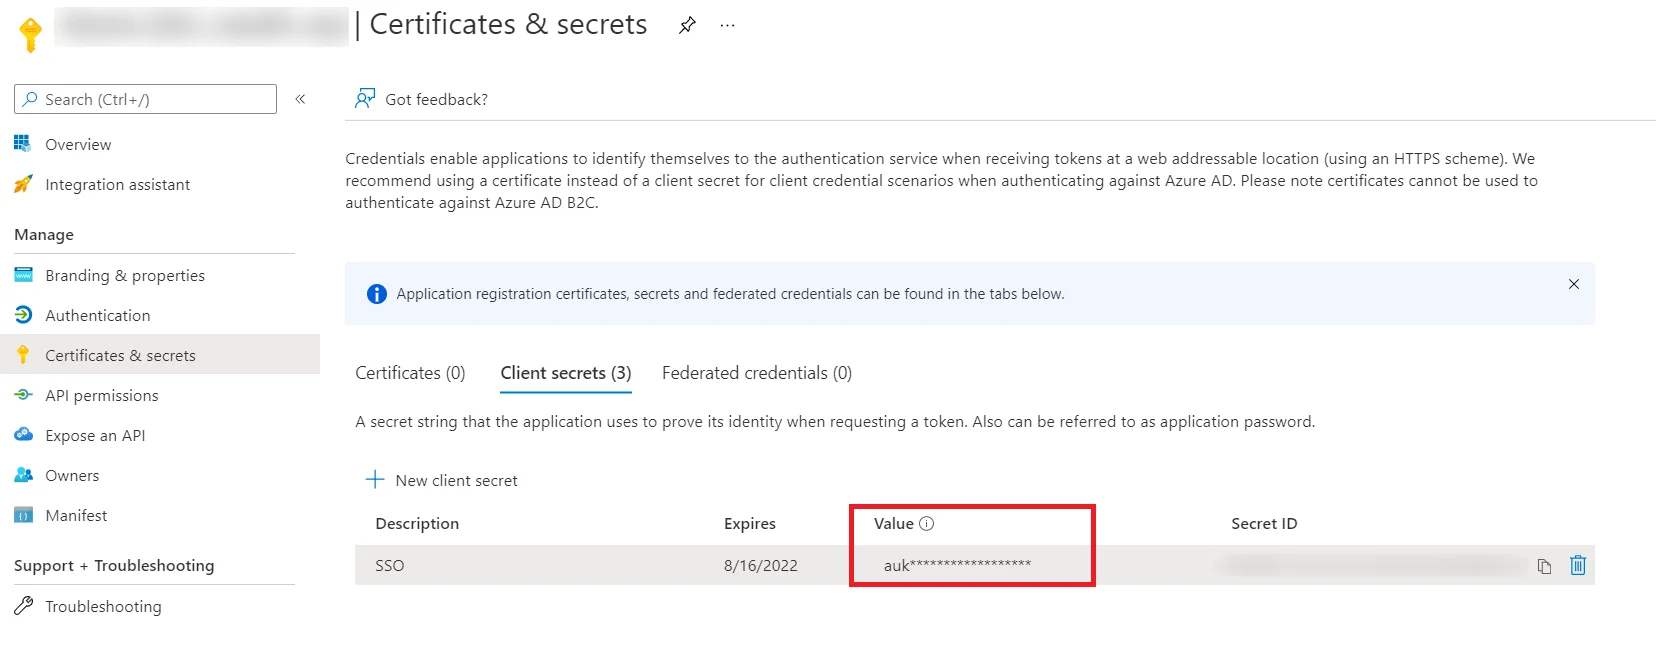 nopCommerce OAuth Single Sign-On (SSO) using Office365 as IDP - Secret-Key-2